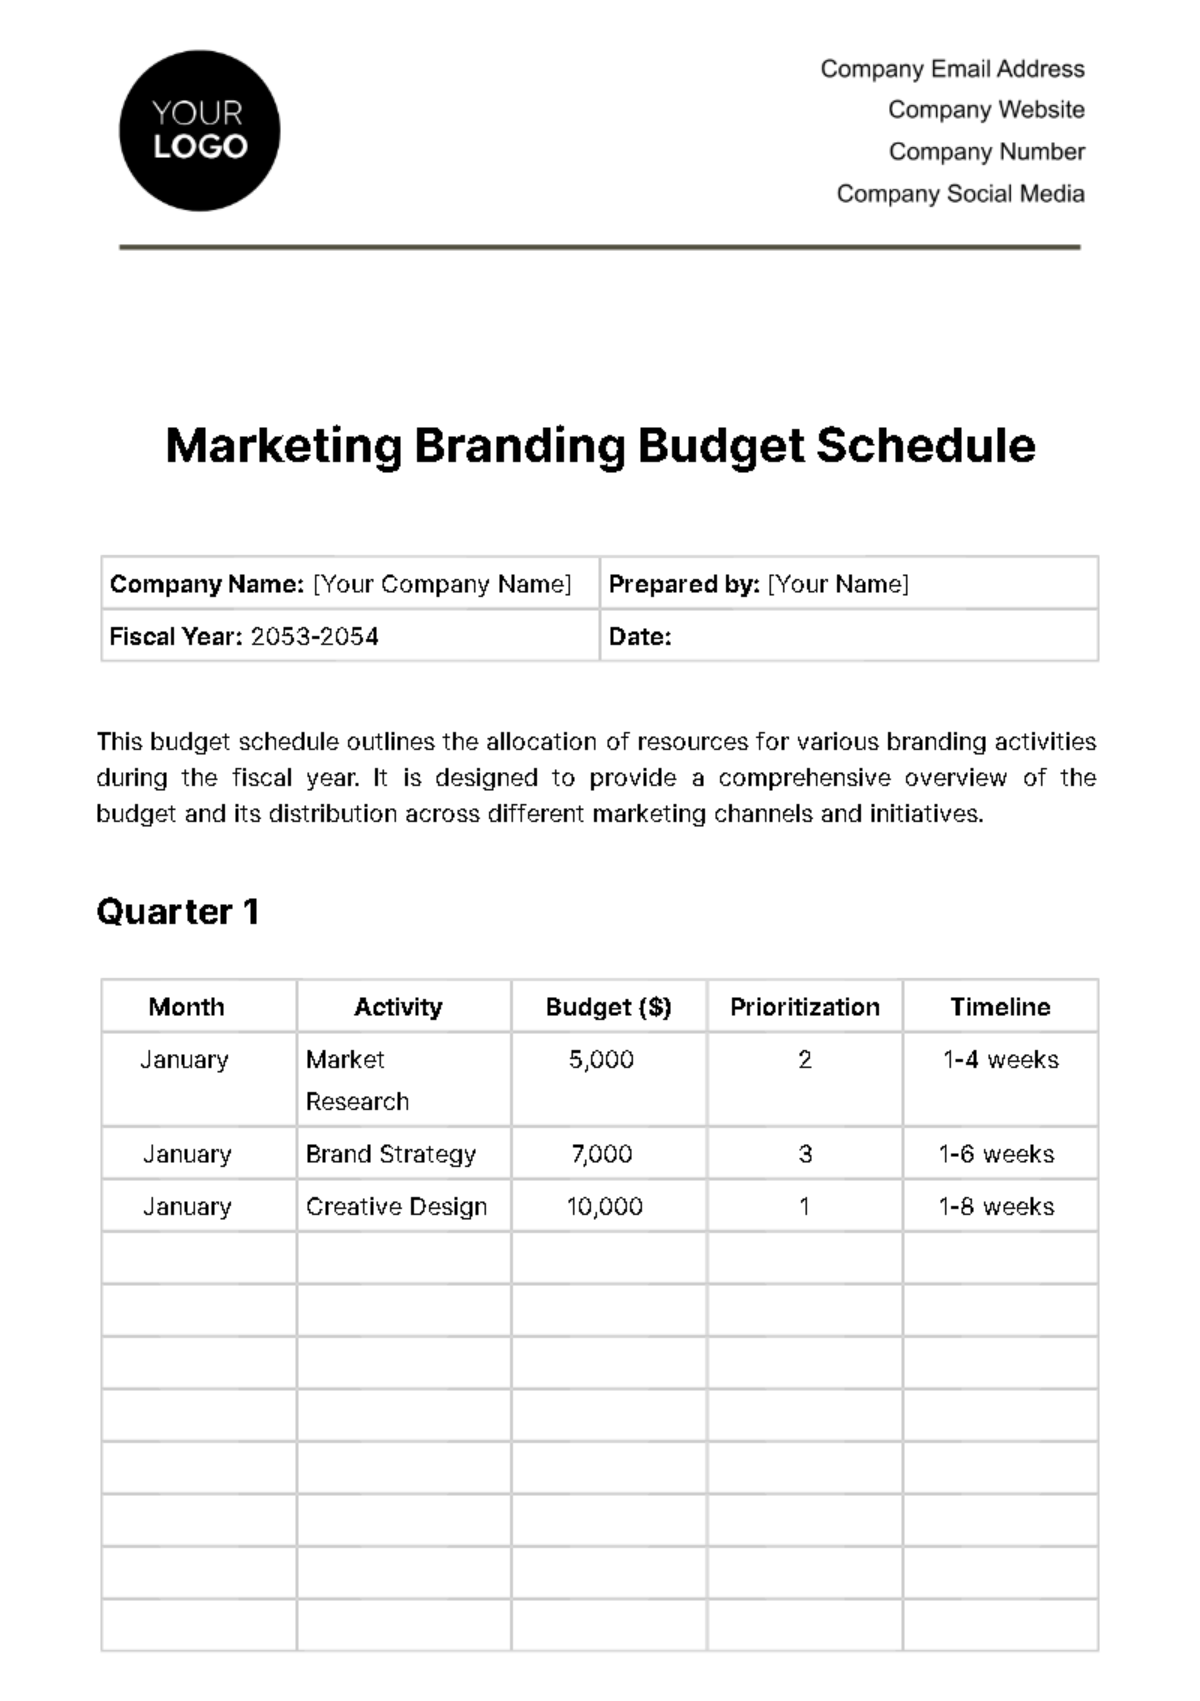 Free Marketing Branding Budget Schedule Template